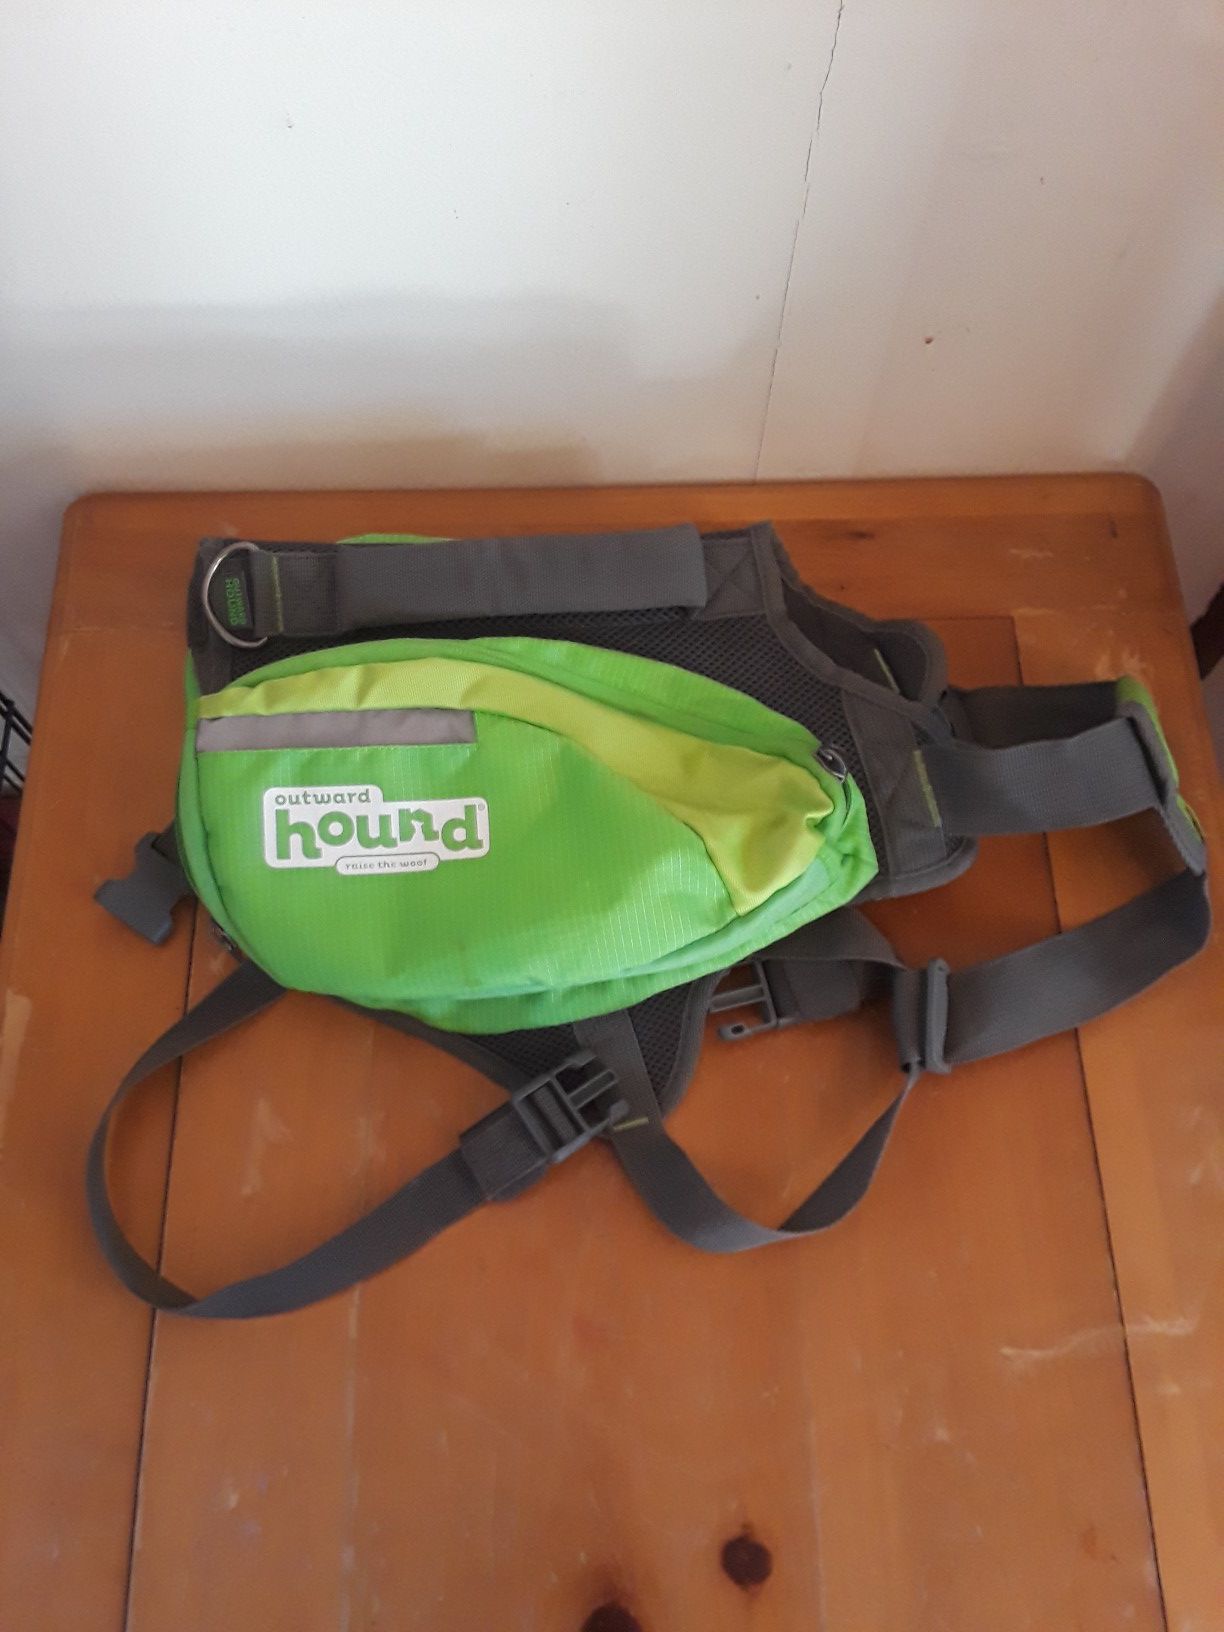 Outward Hound Backpack